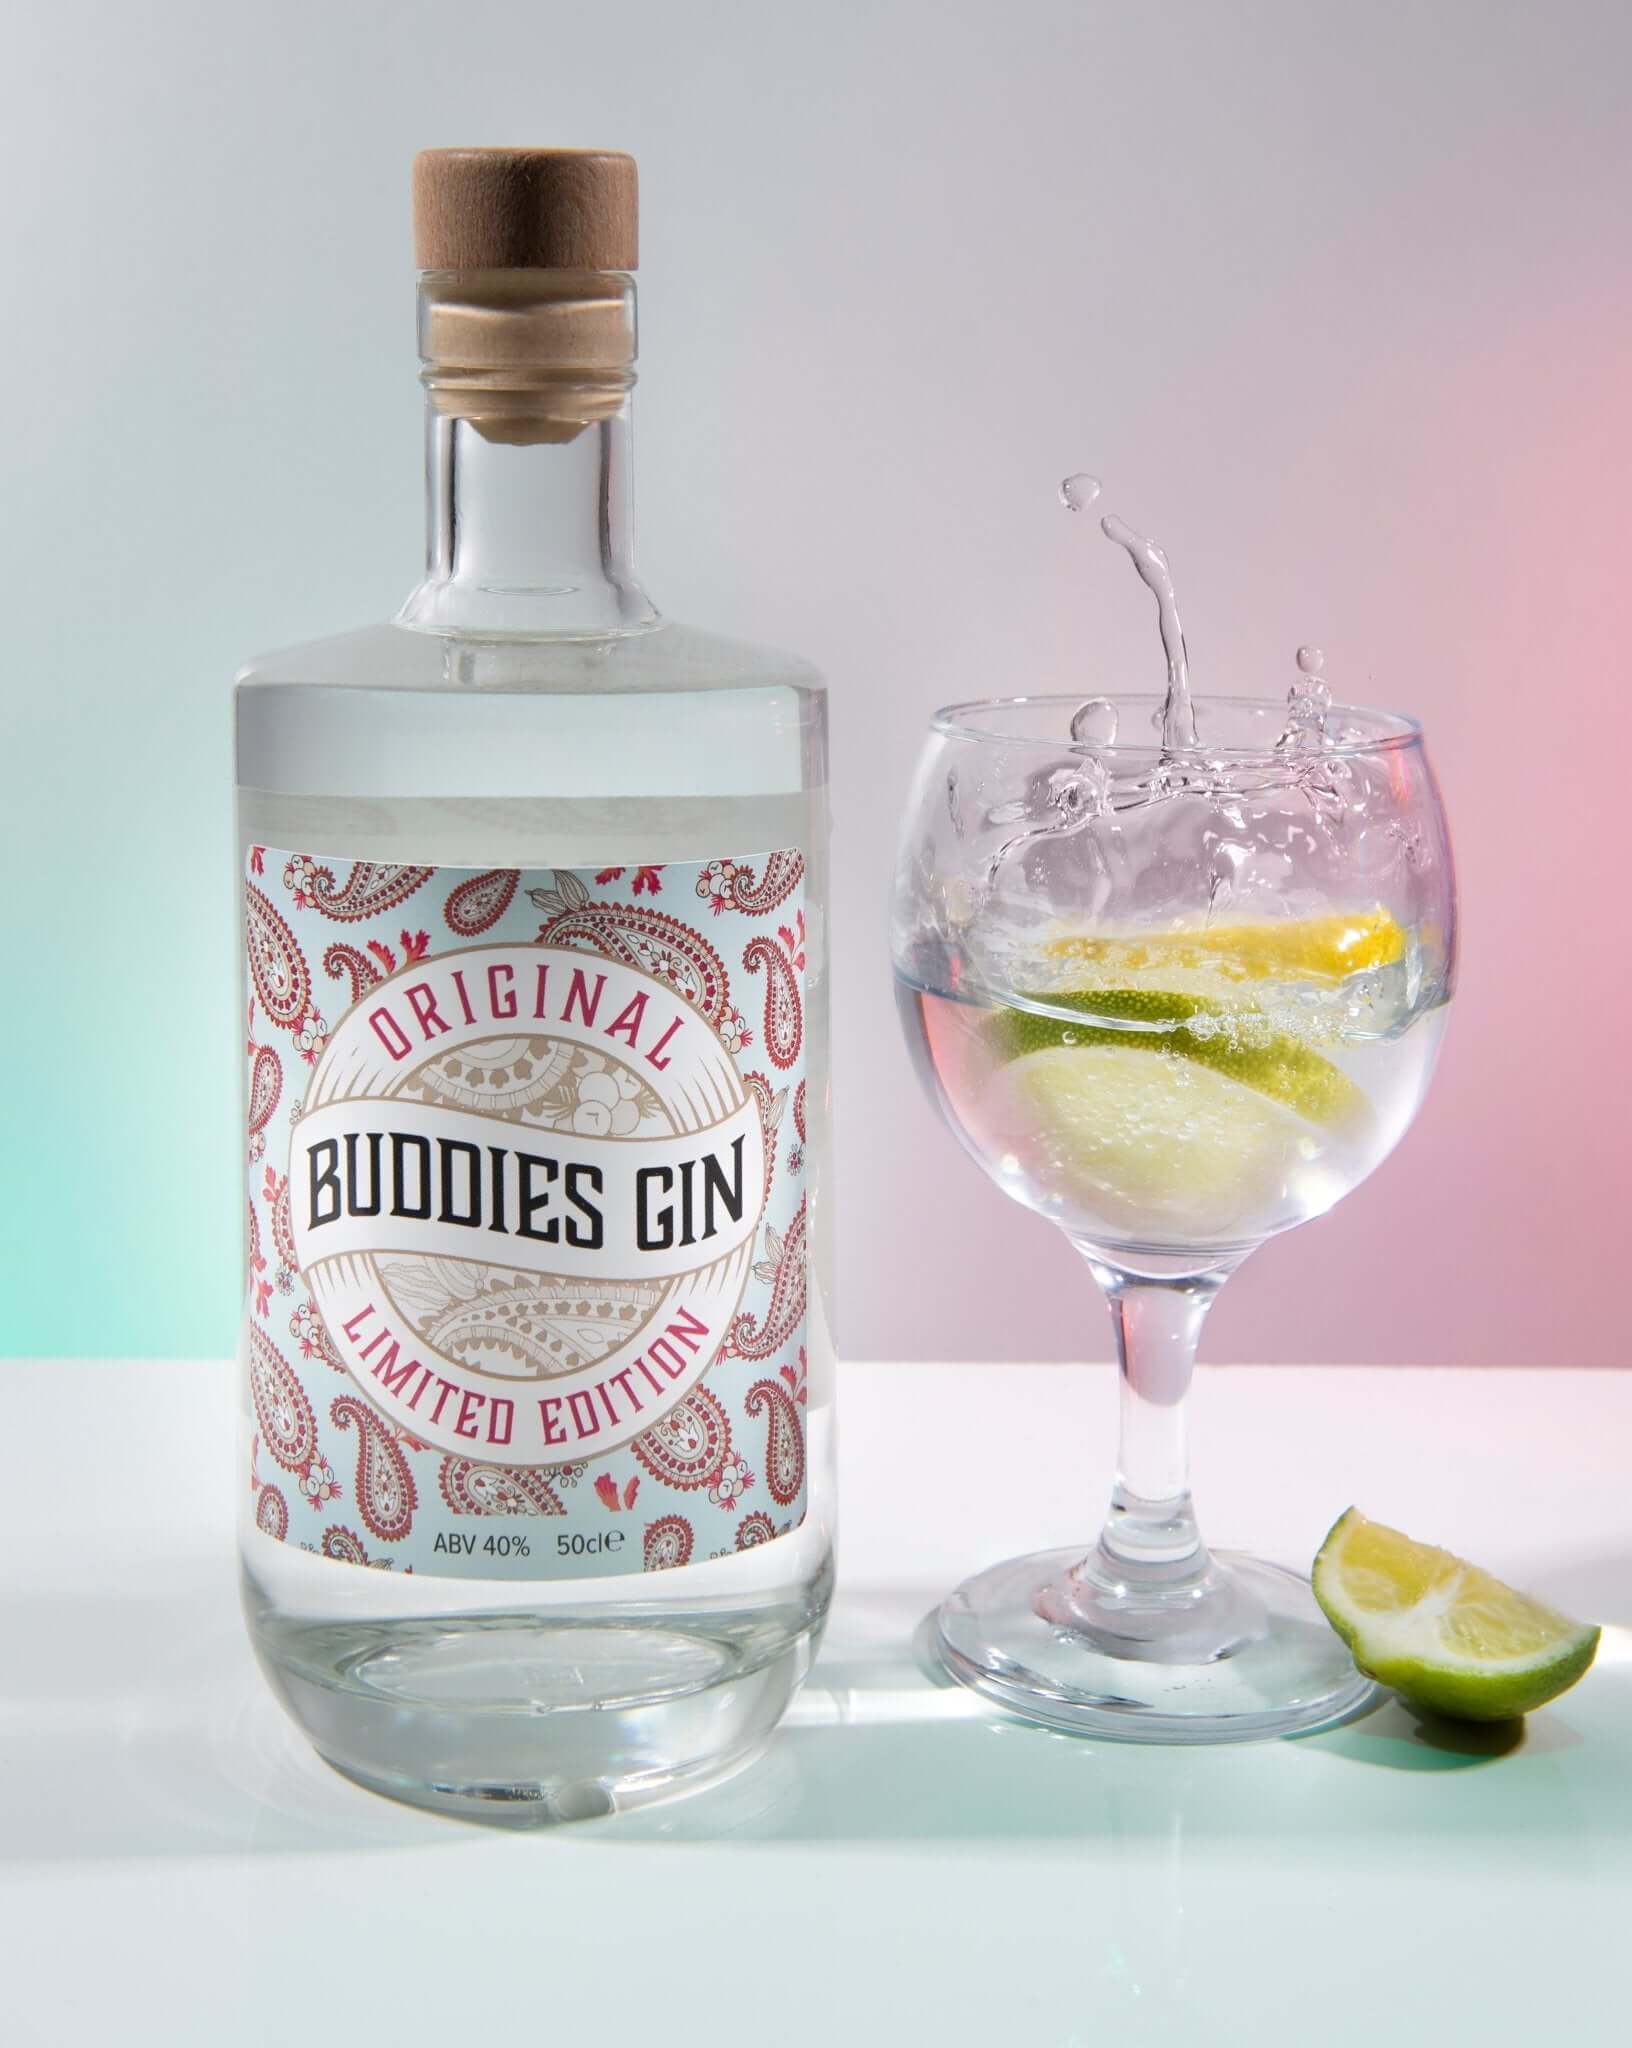 Limited Edition 500ml Original Buddies Gin - Buddies Gin